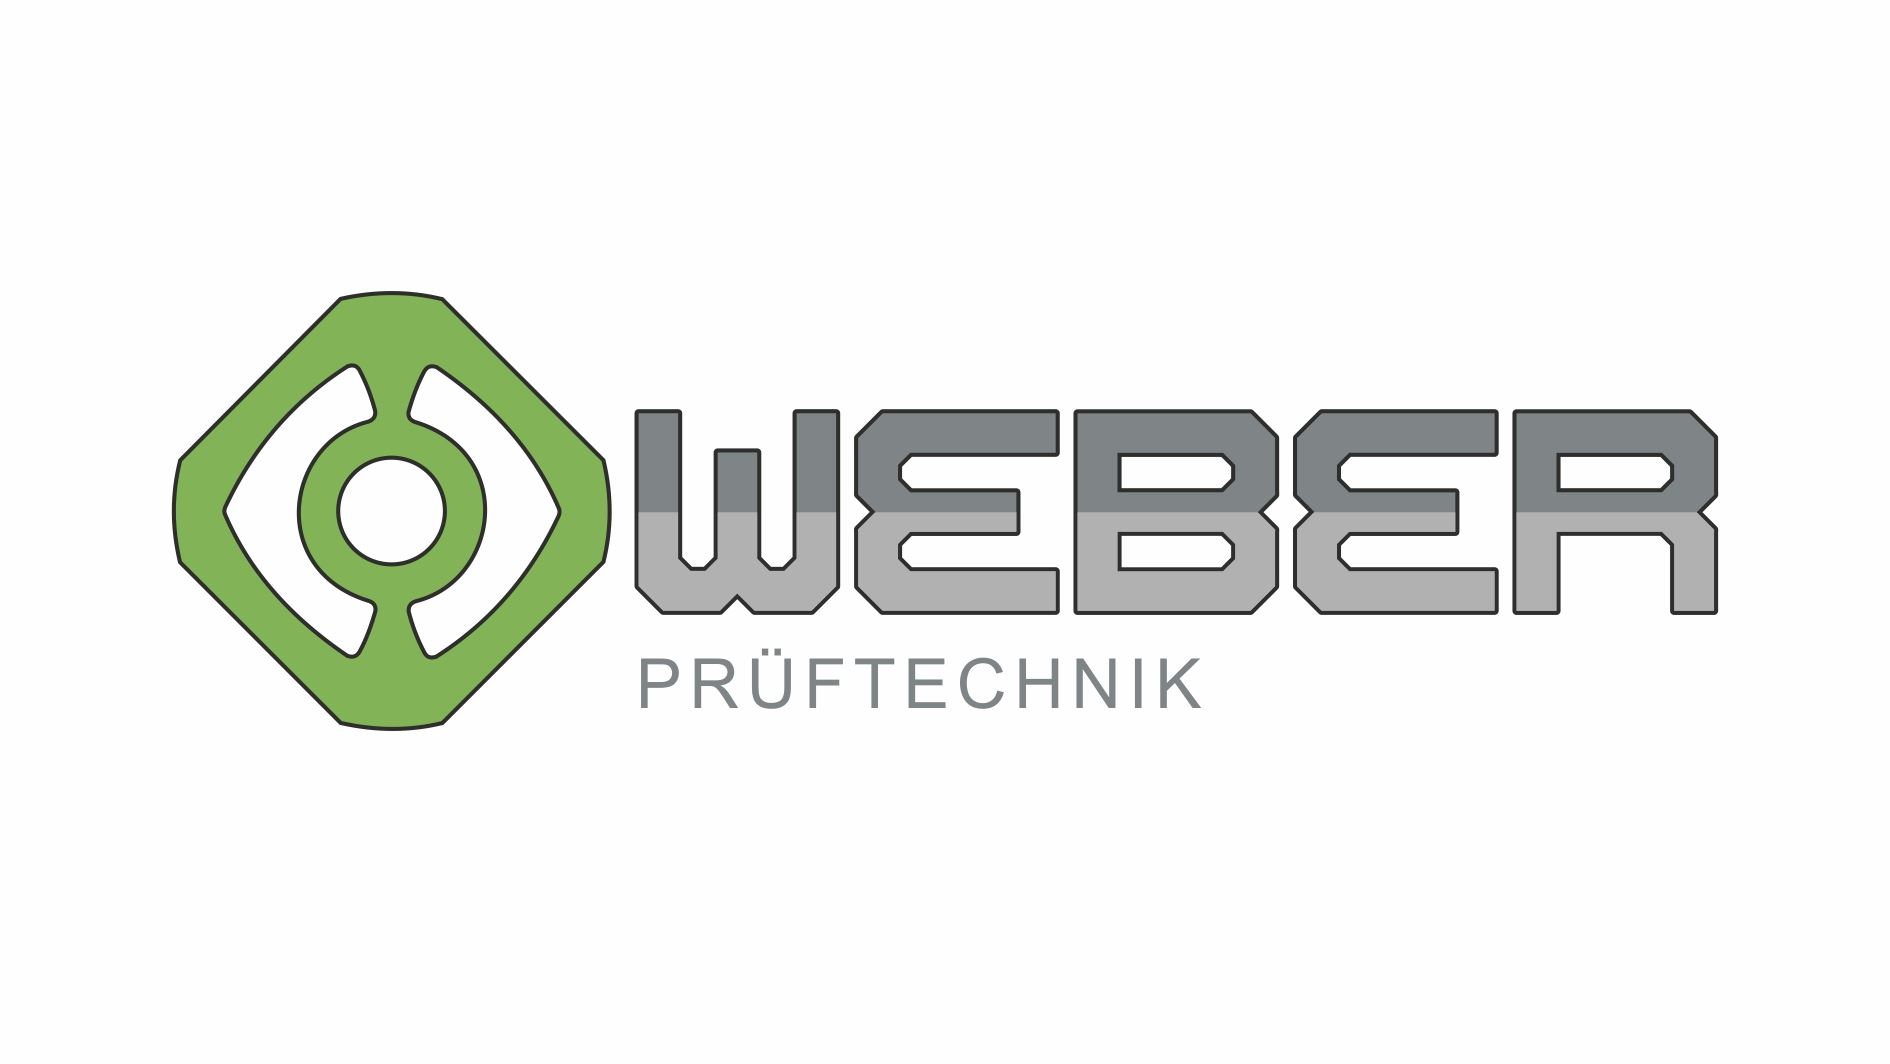 Weber connect Prüftechnik